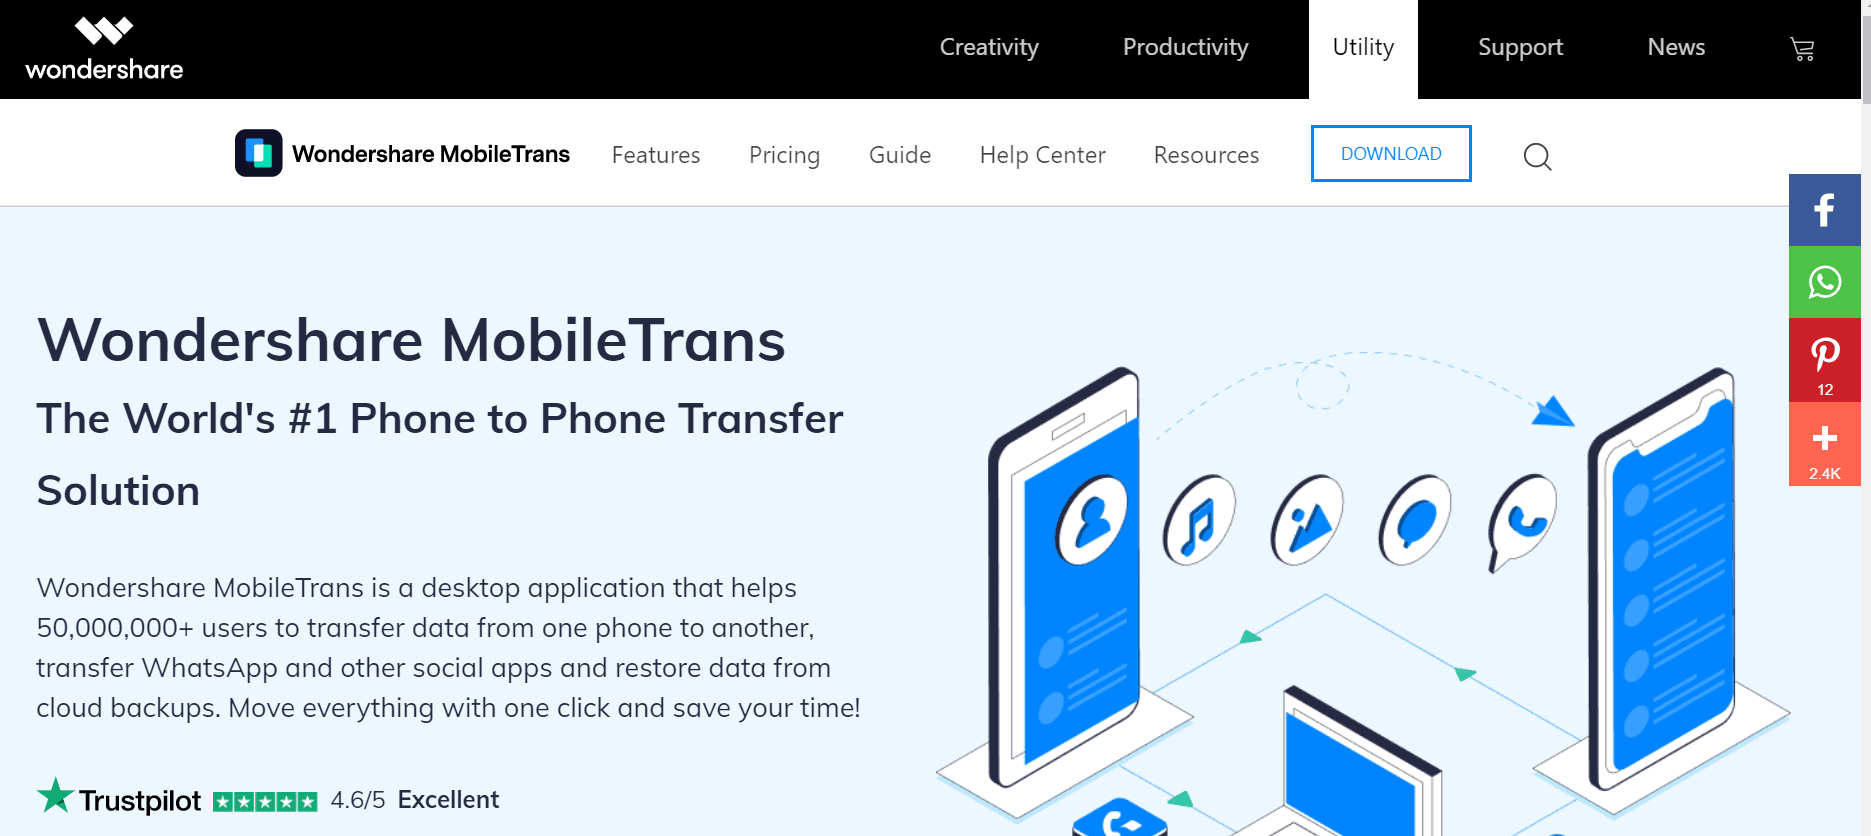 wondershare mobiletrans review